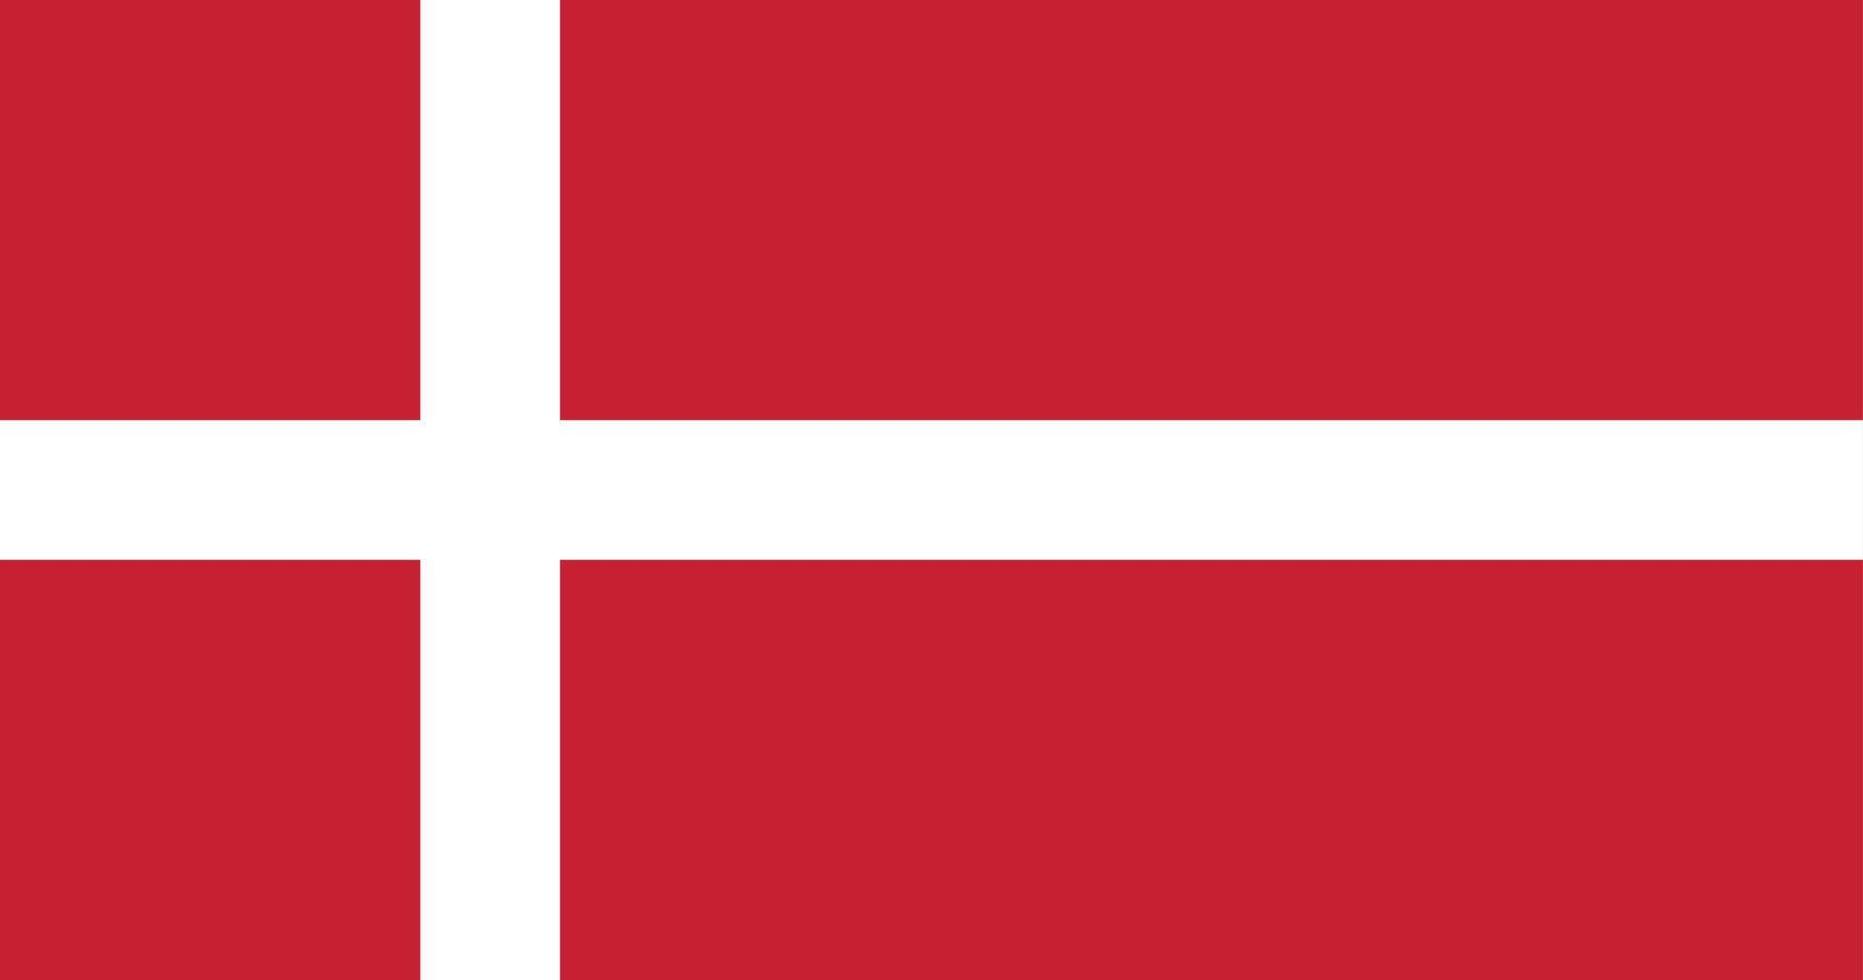 Denmark flag with original RGB color vector illustration design